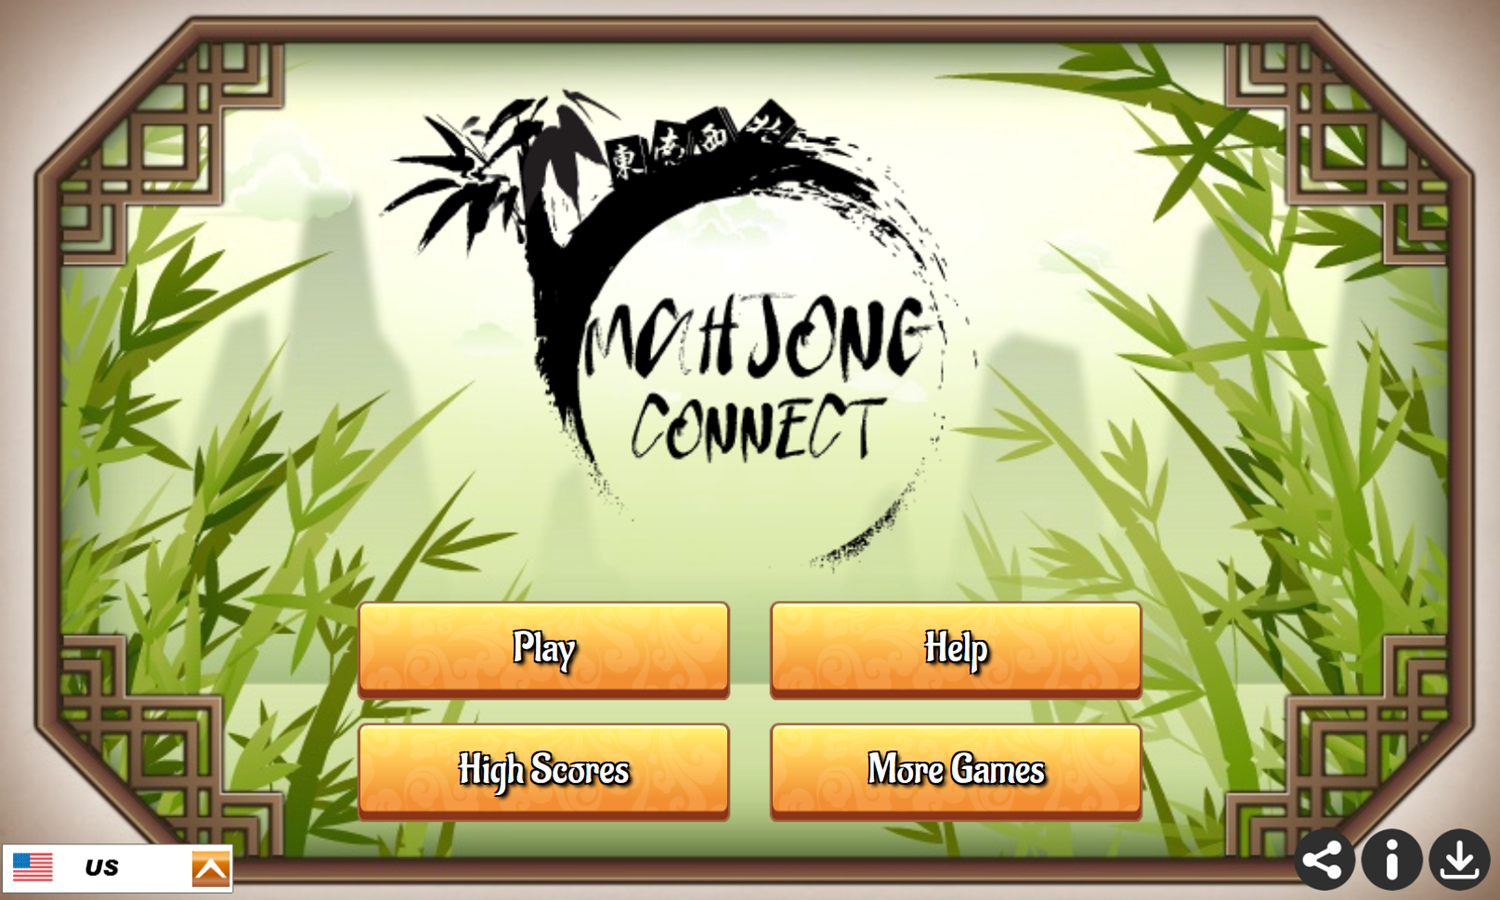 Mahjong Connect Game Welcome Screen Screenshot.